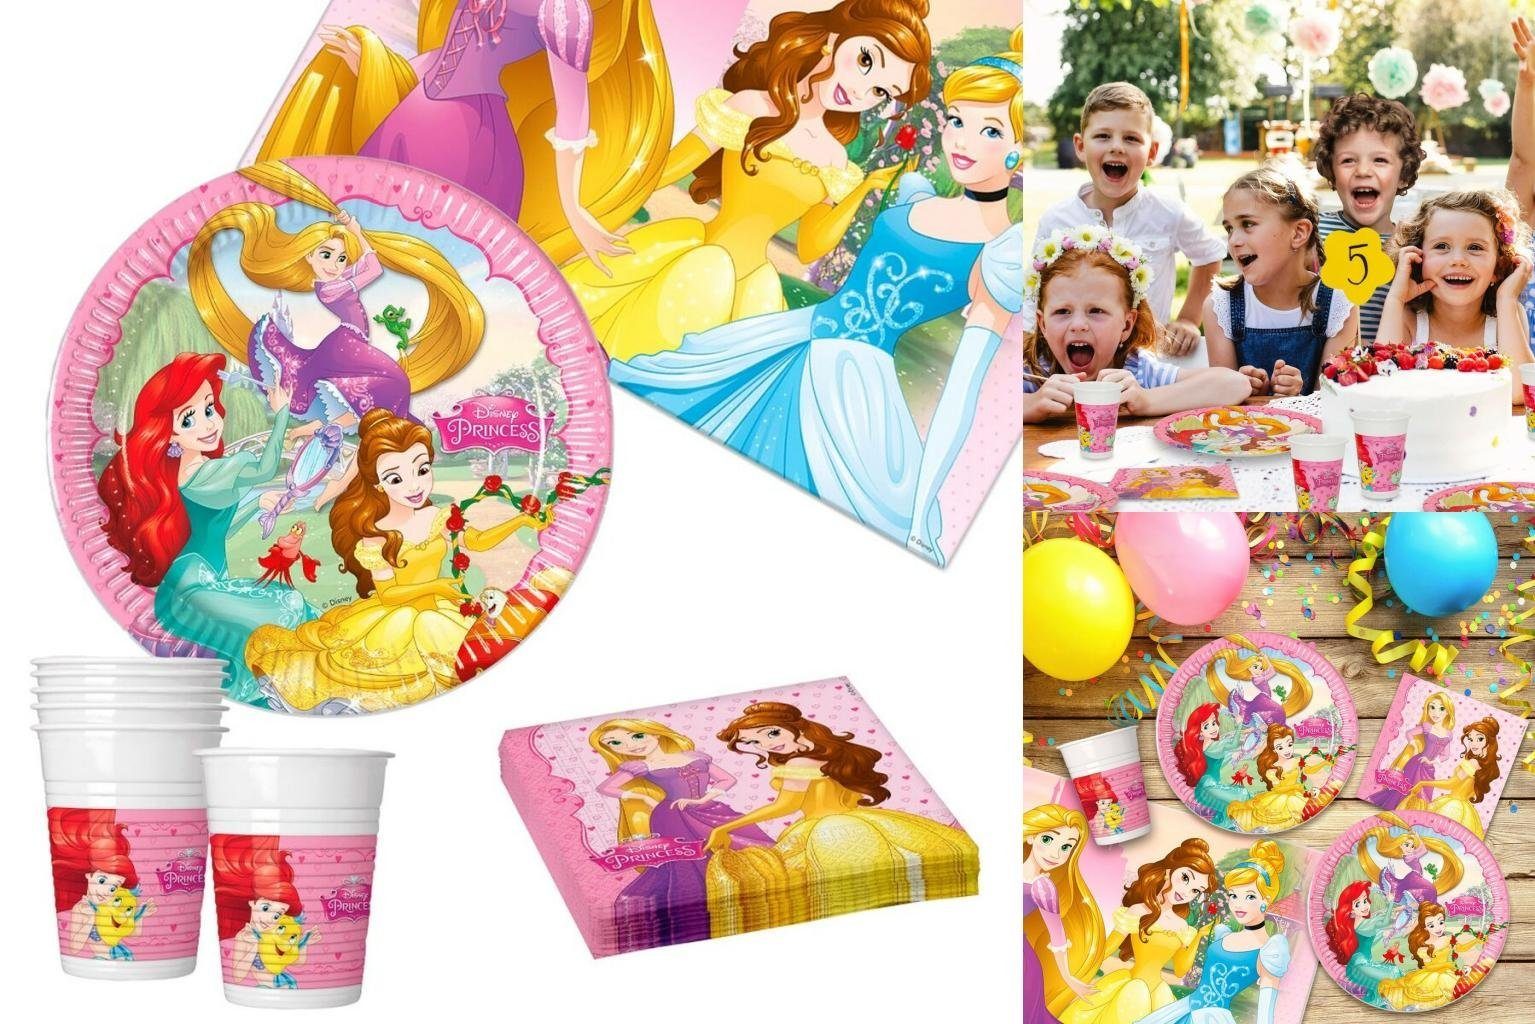 Princesses Disney Einweggeschirr-Set Set Partyartikel Disney Stücke 37 Princesses